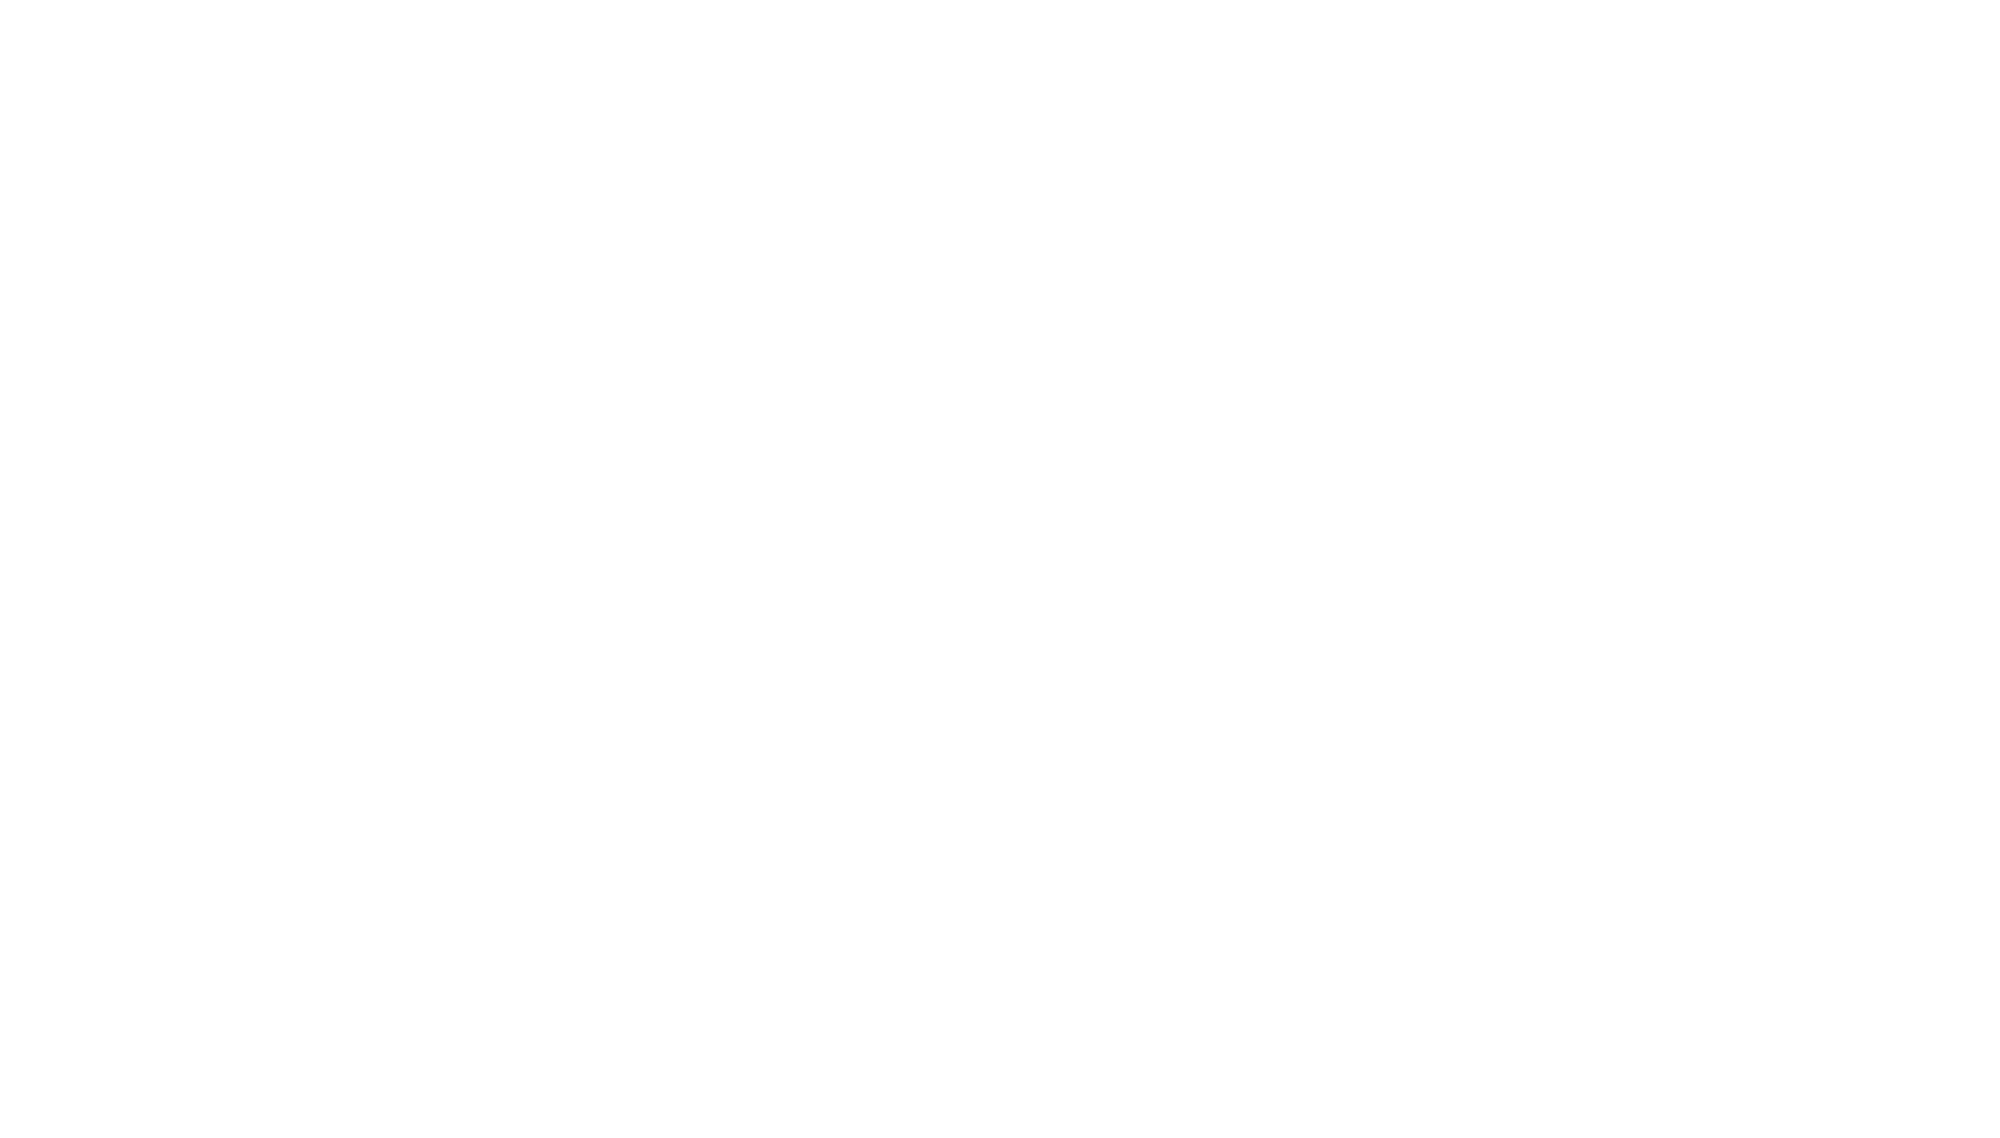 bushs-best-logo-vector